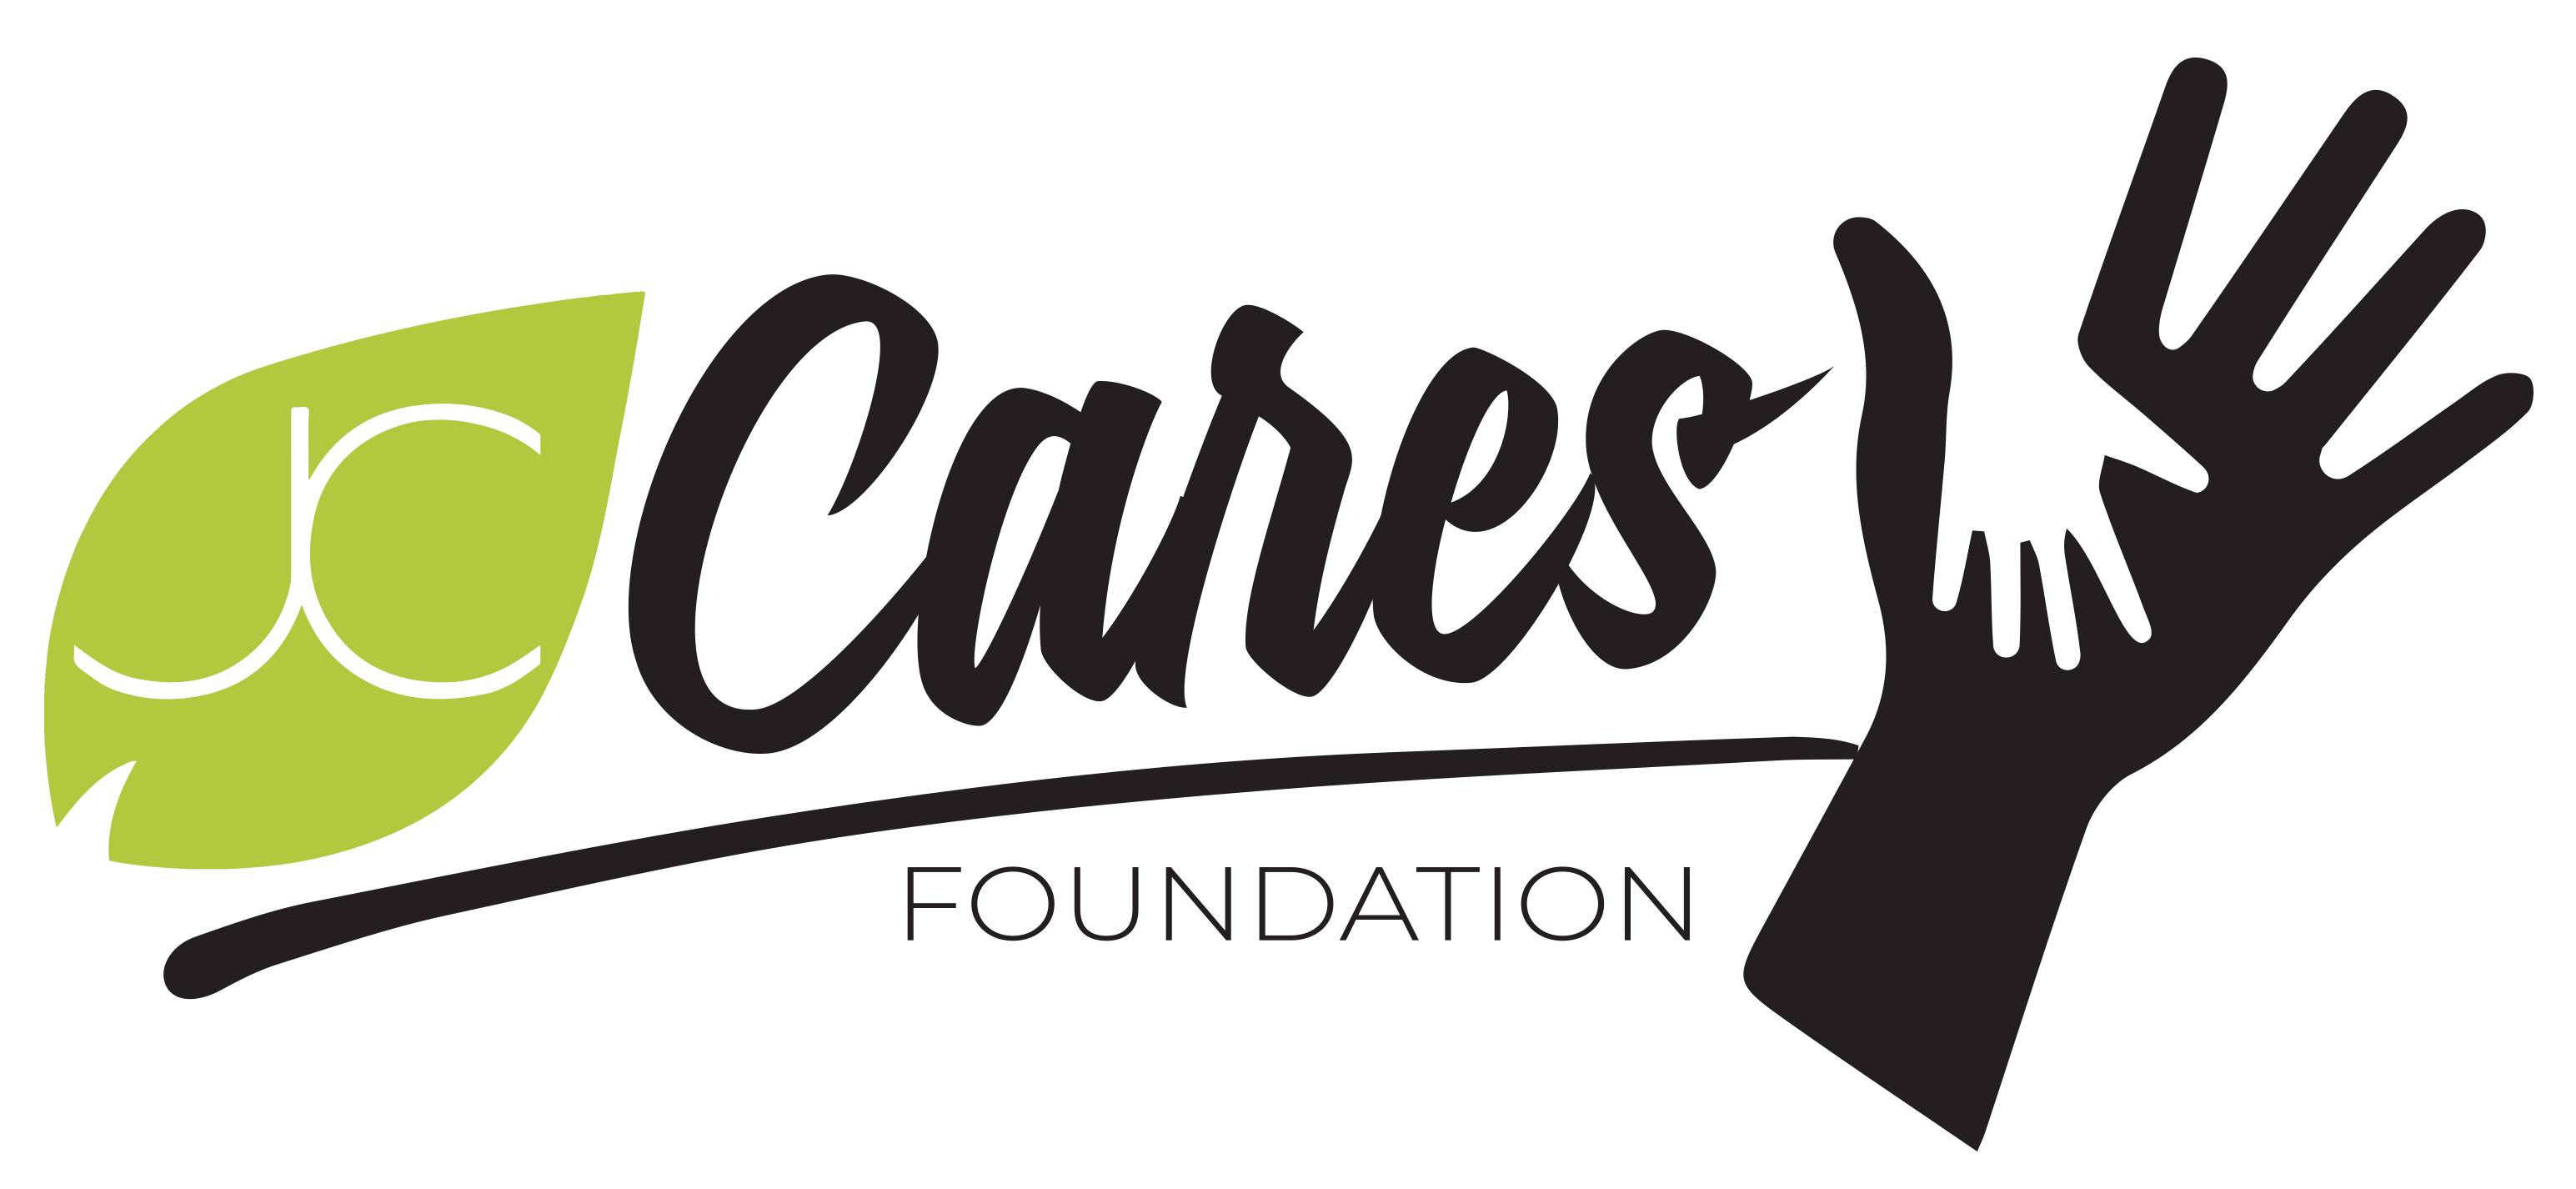 JC Cares Logo